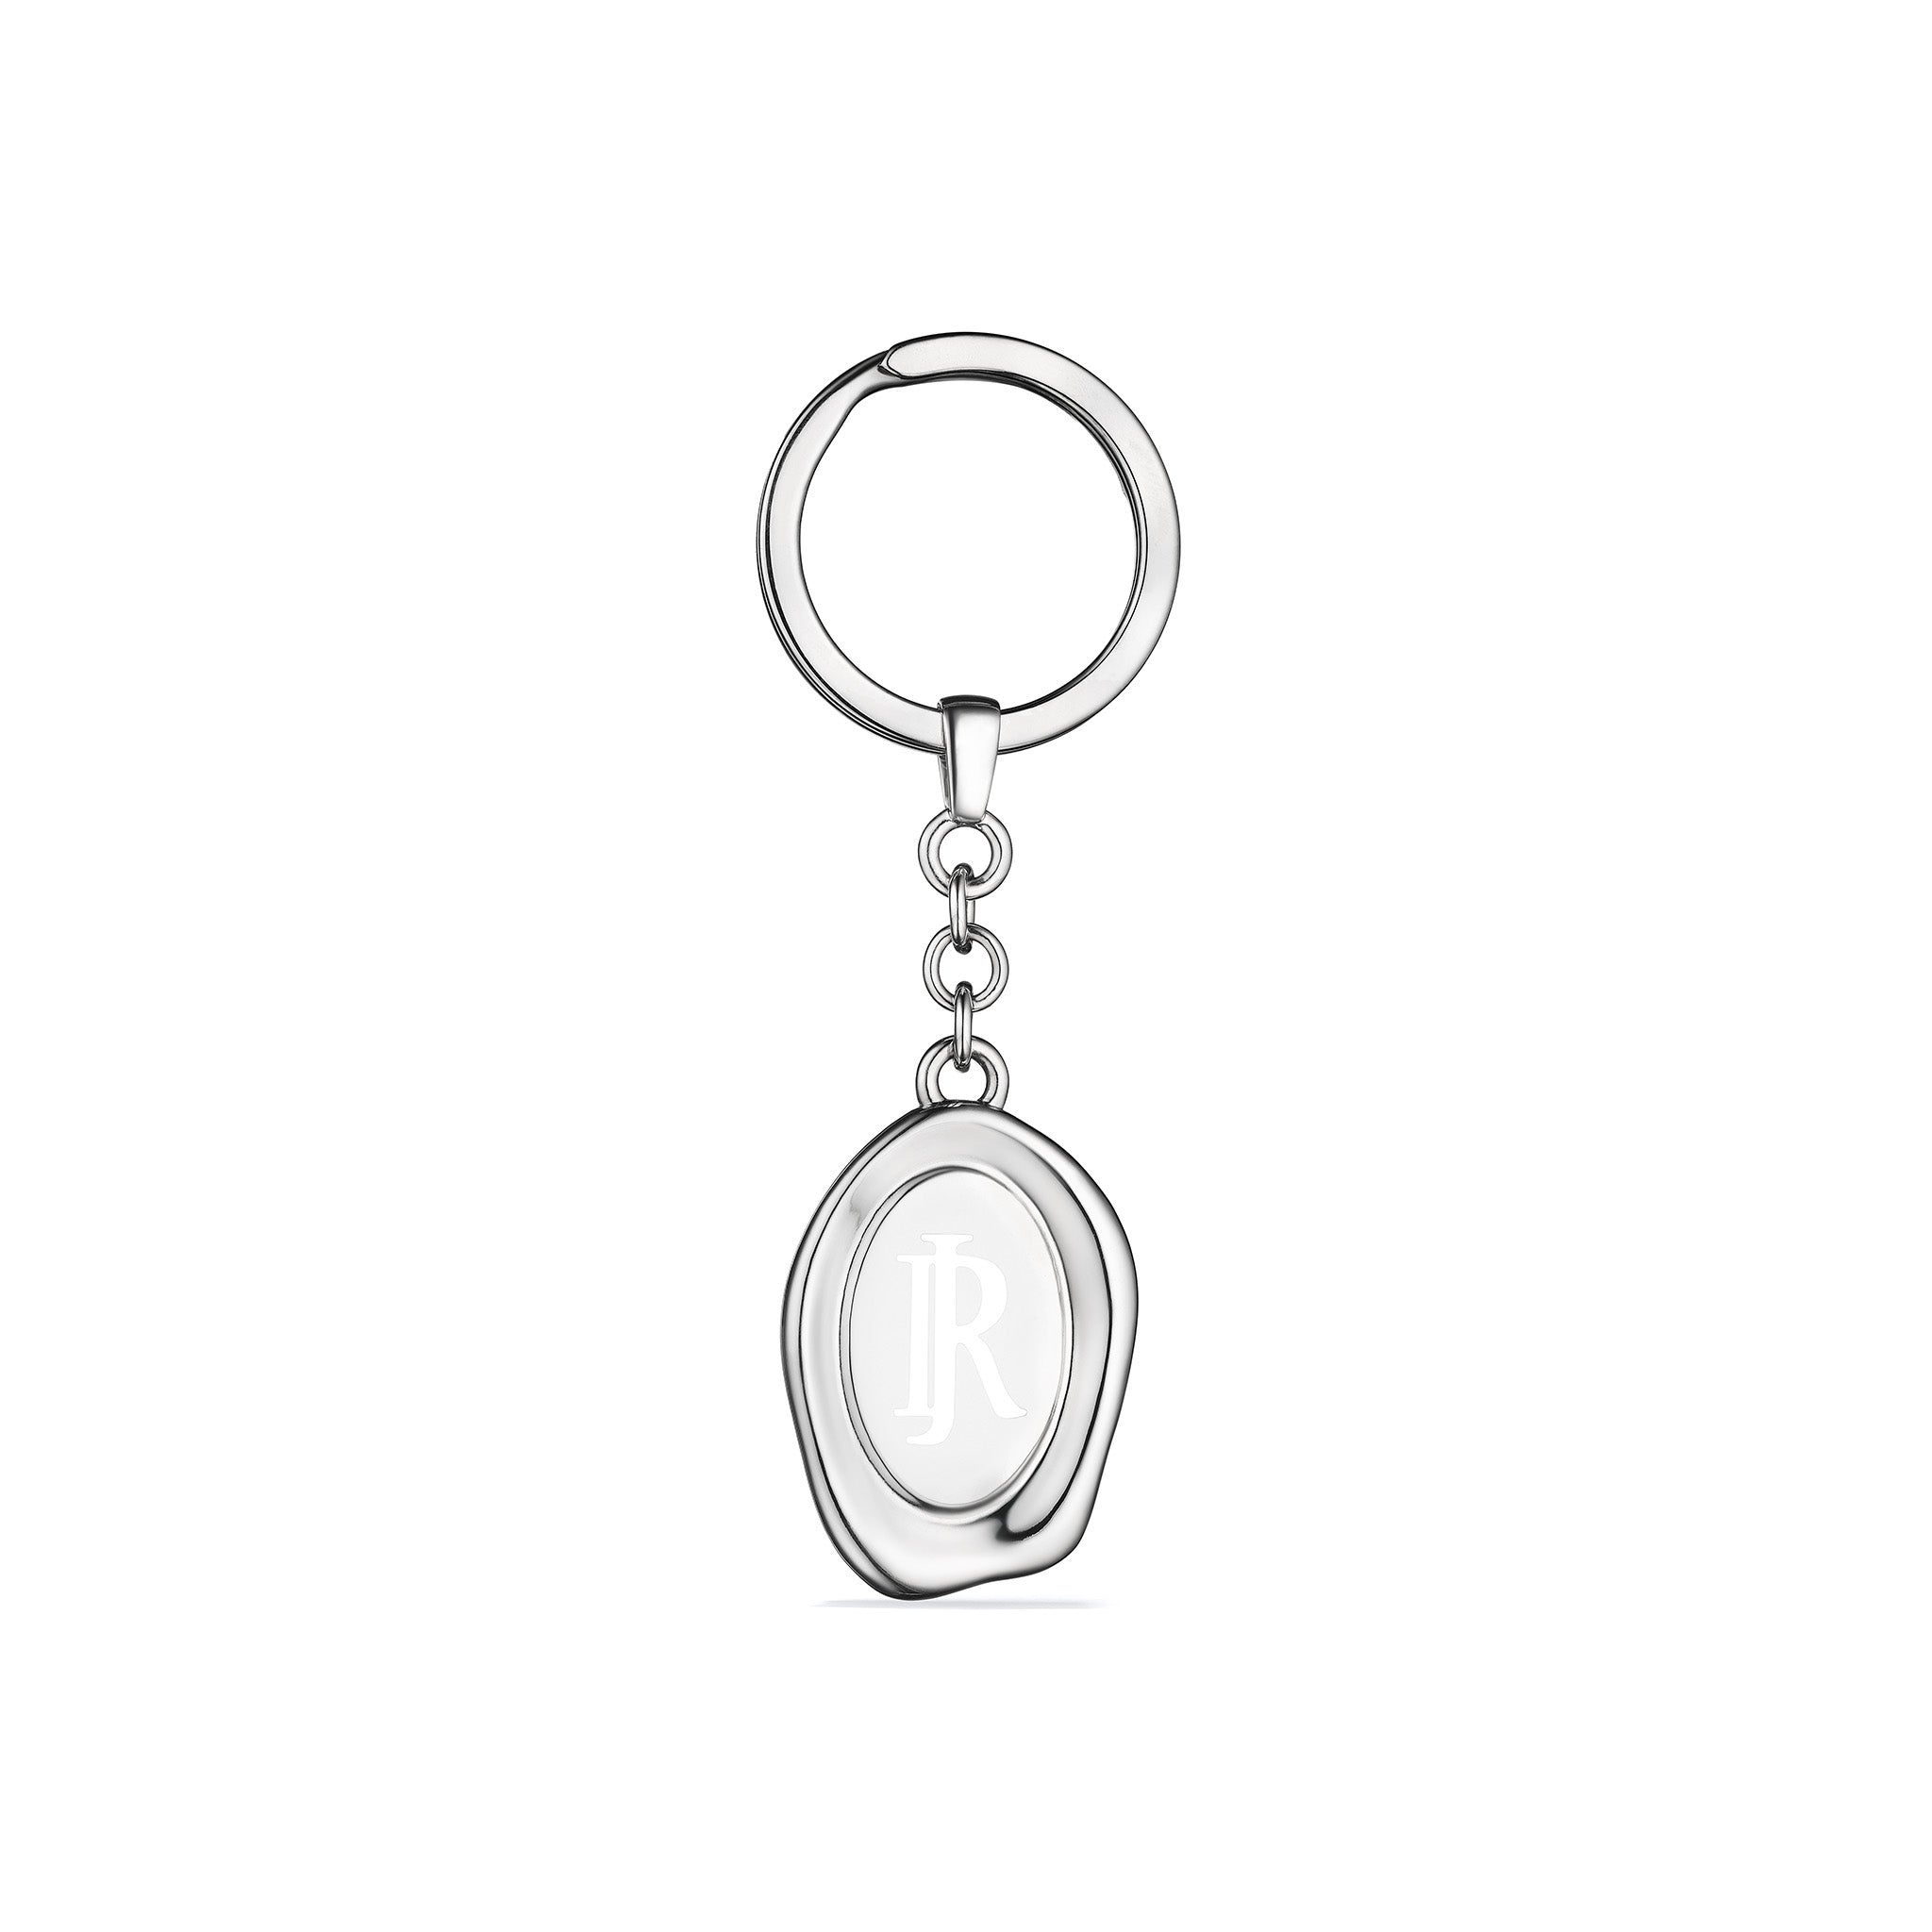 Eros 3707 Key Ring with White Enamel